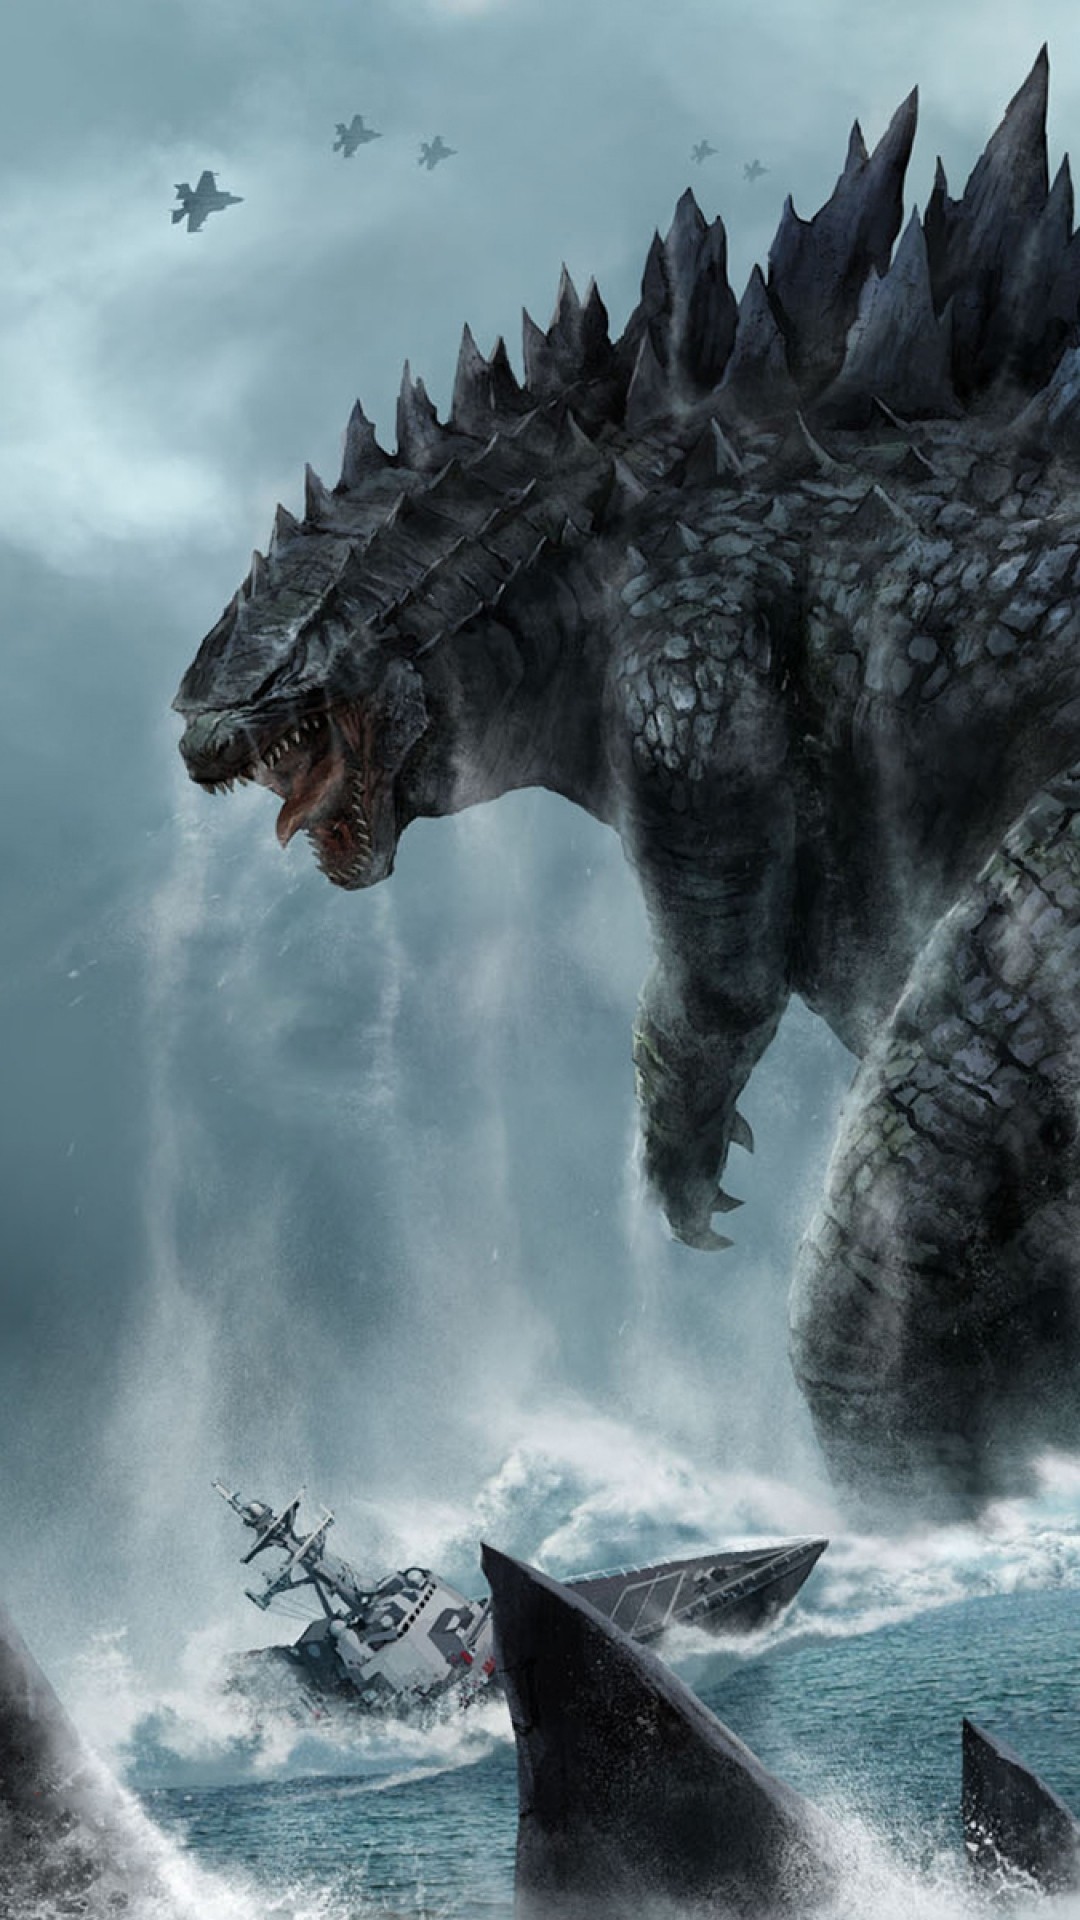 Godzilla wallpaper for iPhone